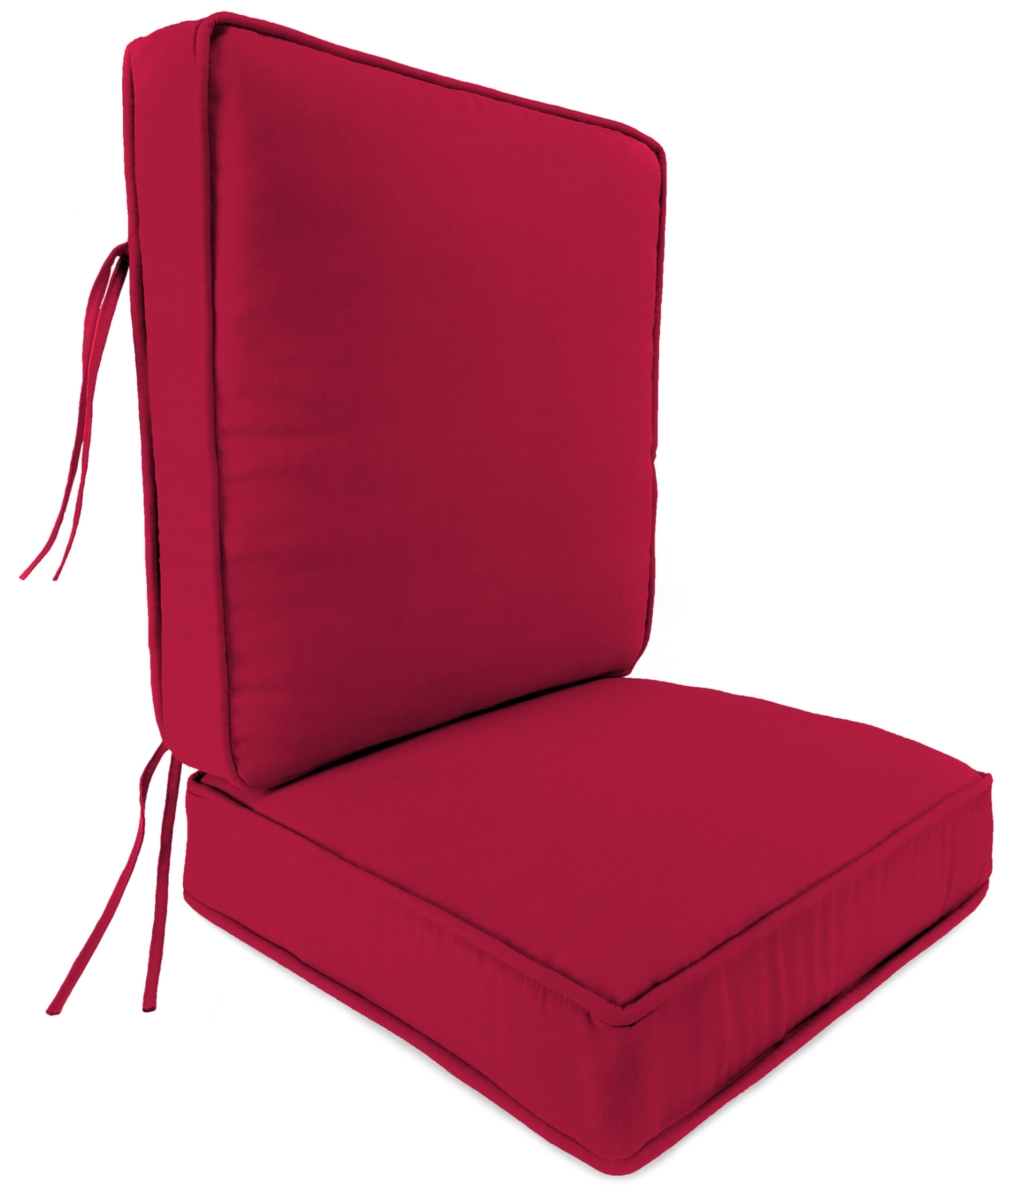 9746pk1-278c Deep Seat Chair Cushion In Pompeii Red - 2 Piece